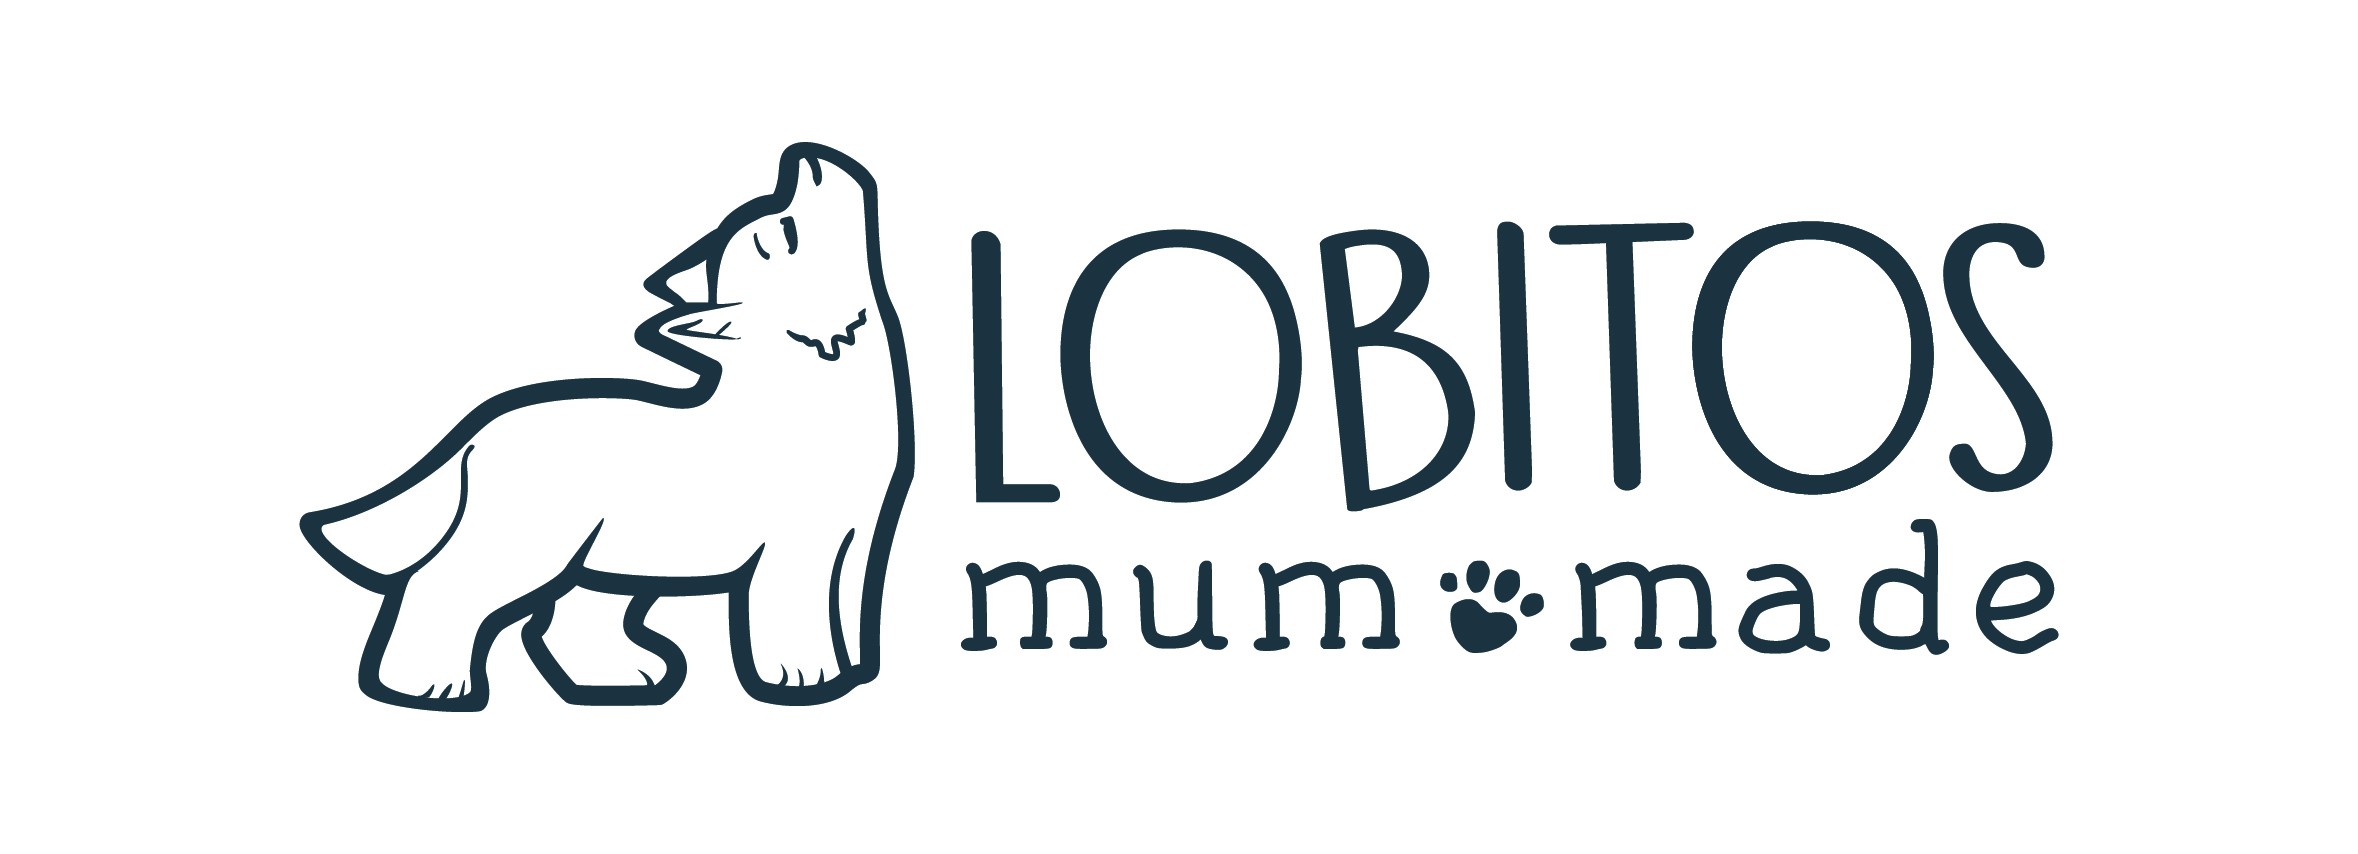 Lobitos Mum-made